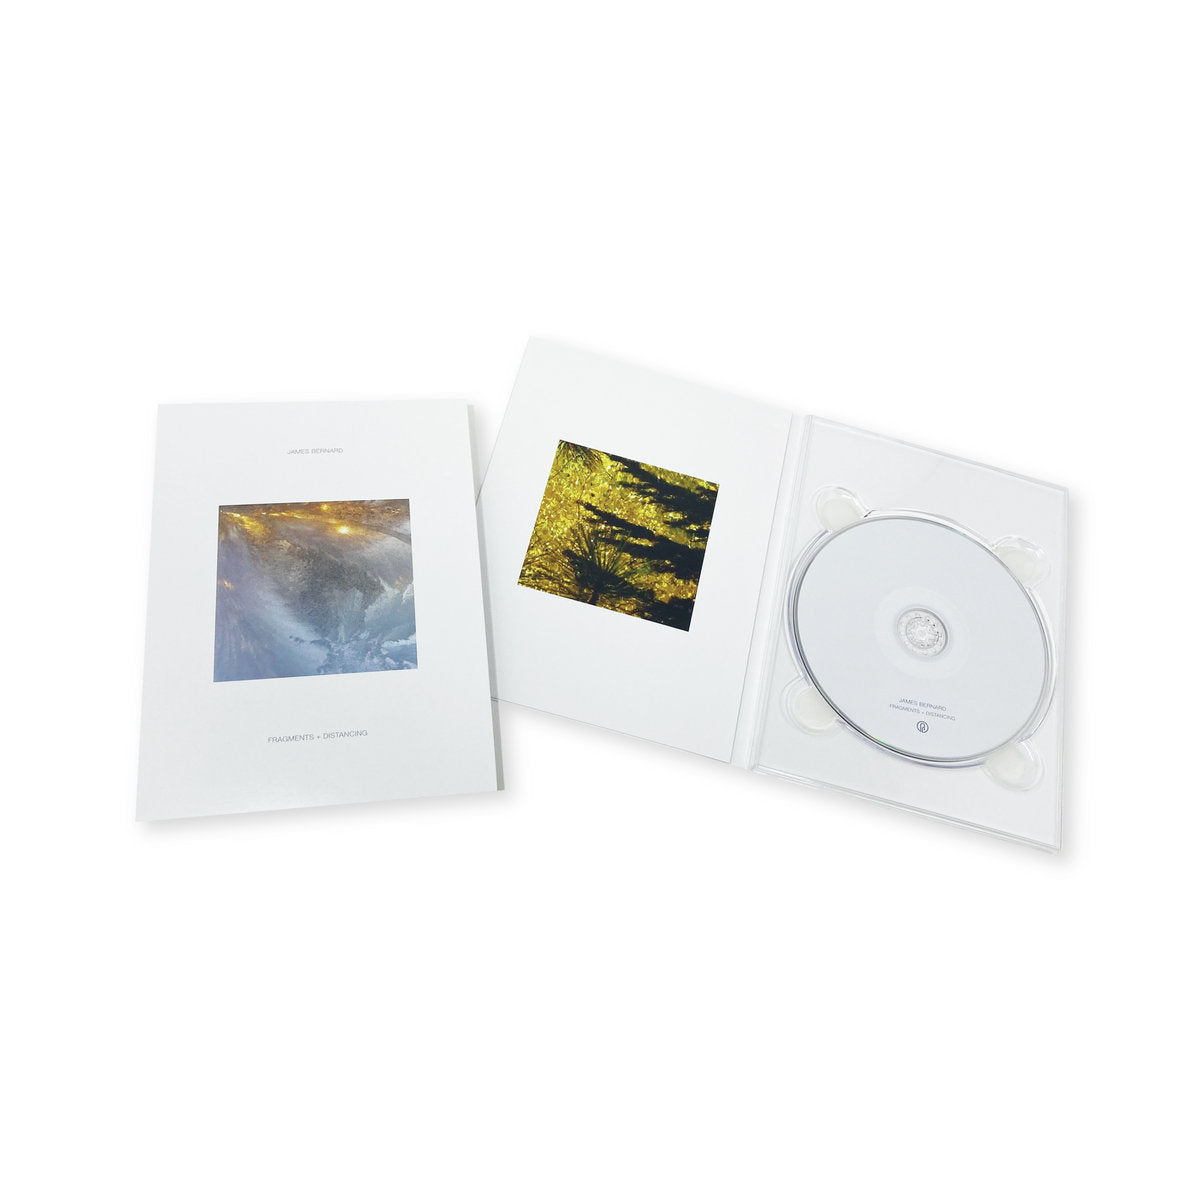 James Bernard 'Fragments + Distancing' [CD]